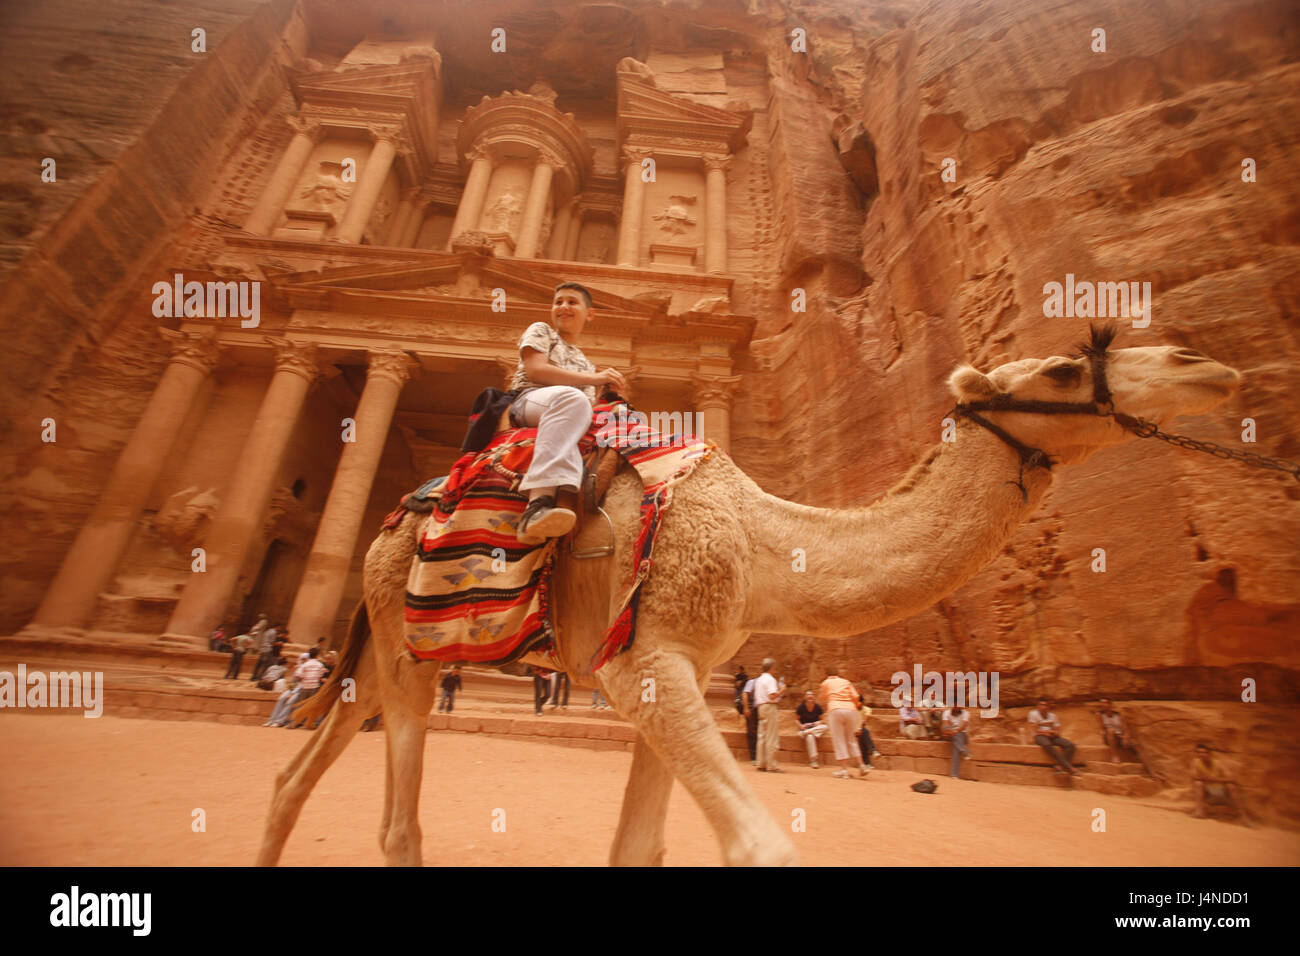 The Middle East, Jordan, Petra, treasure house, tourist, camel, Stock Photo